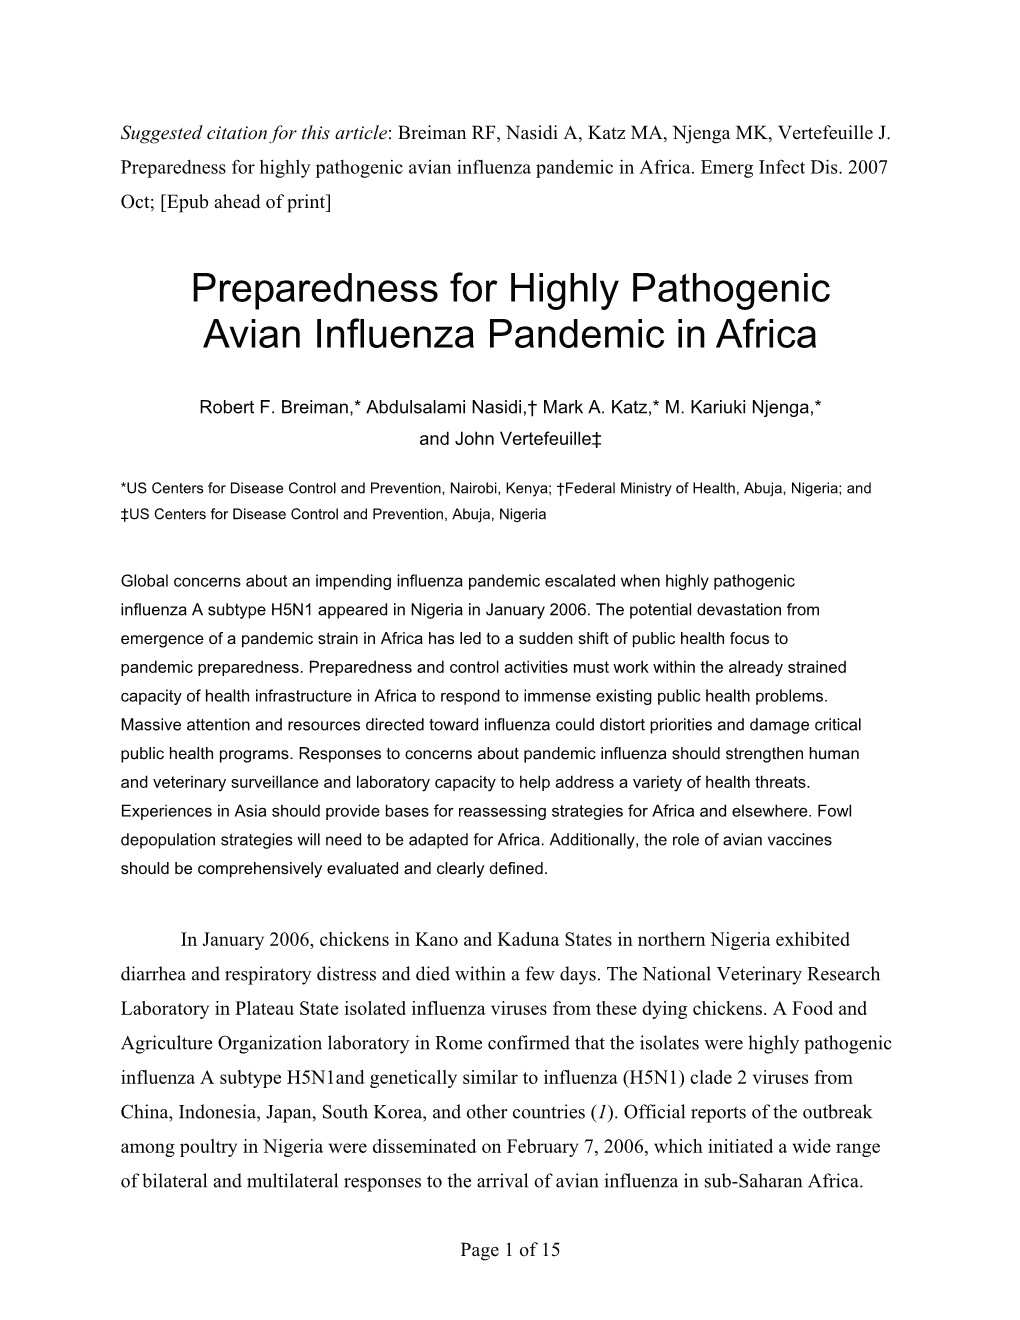 Preparedness for Highly Pathogenic Avian Influenza Pandemic in Africa